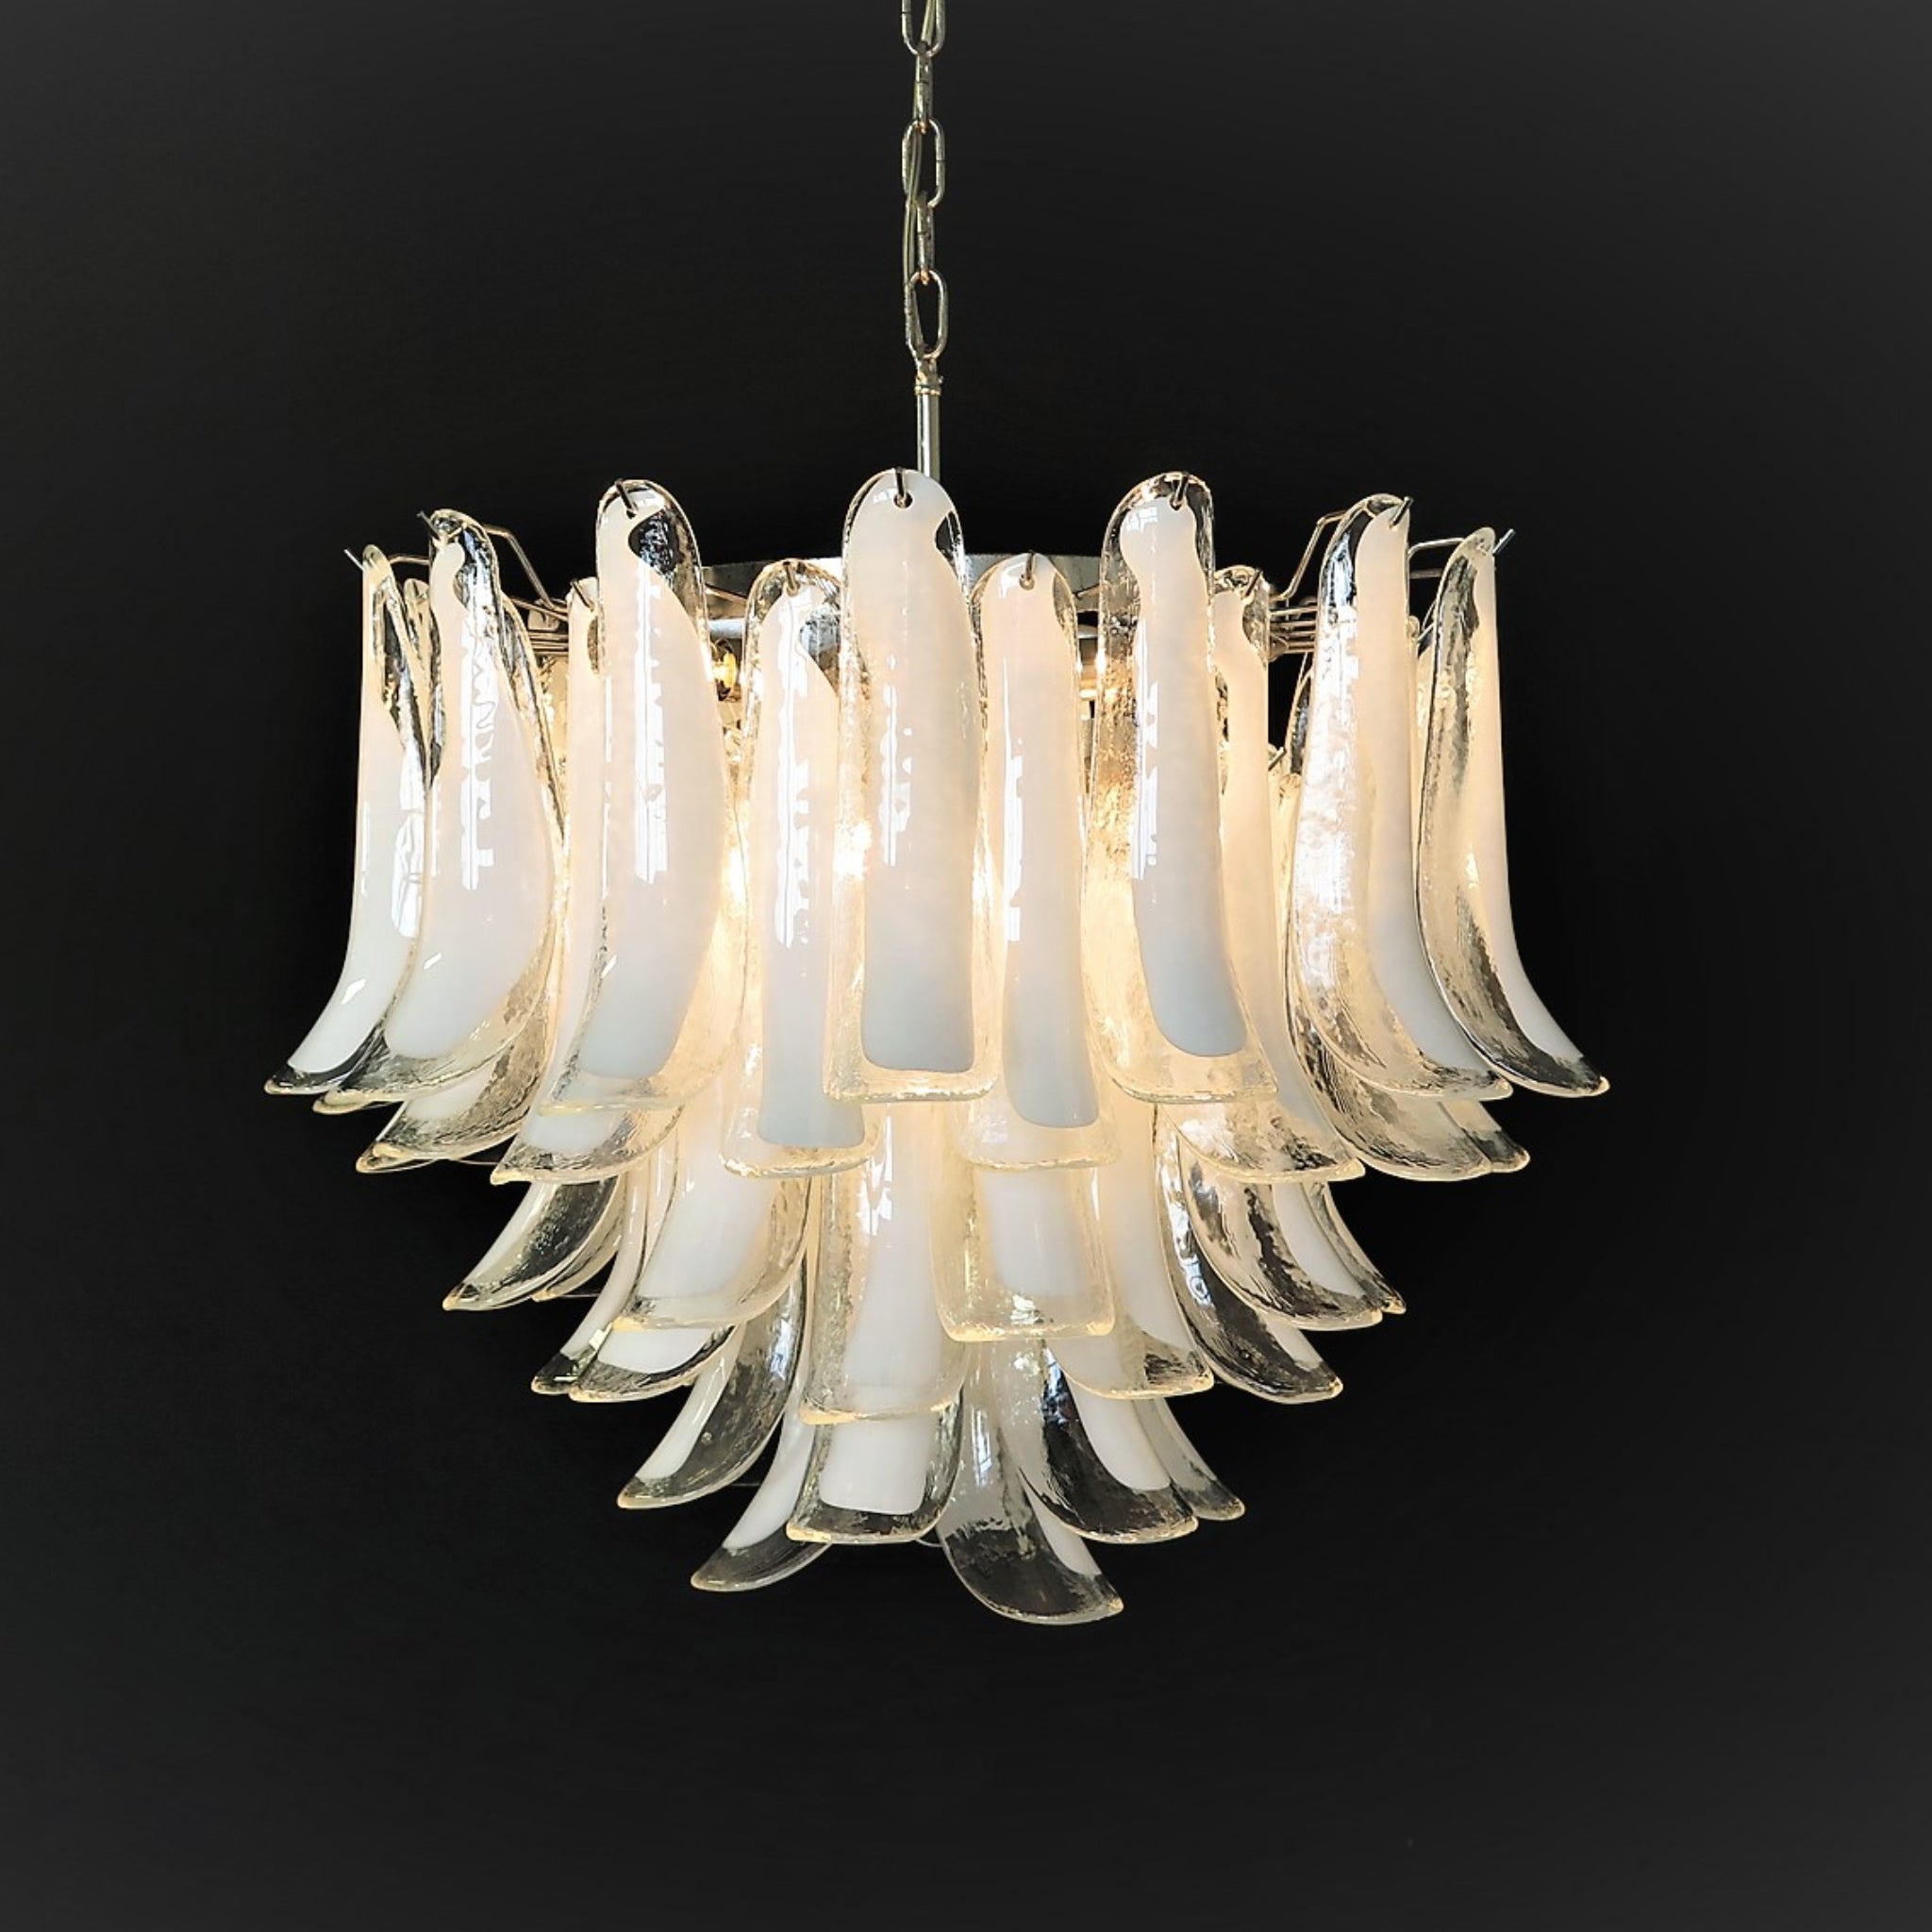 Murano chandelier - Mazzega with 53 transparent lattimo glass petals